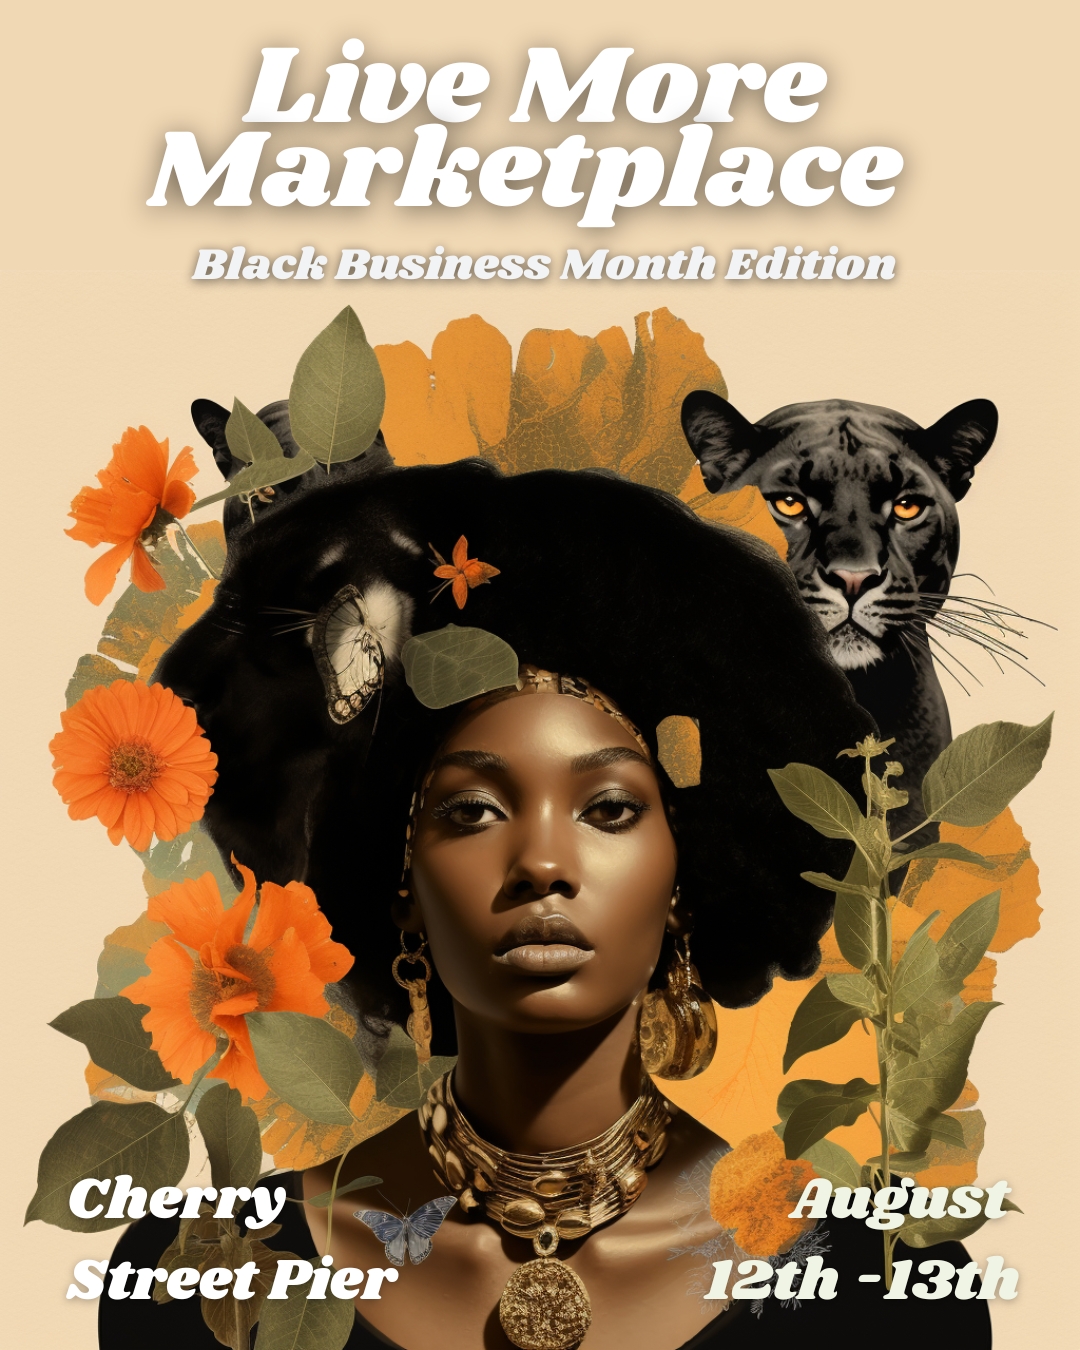 Black Business Month: Live More Marketplace